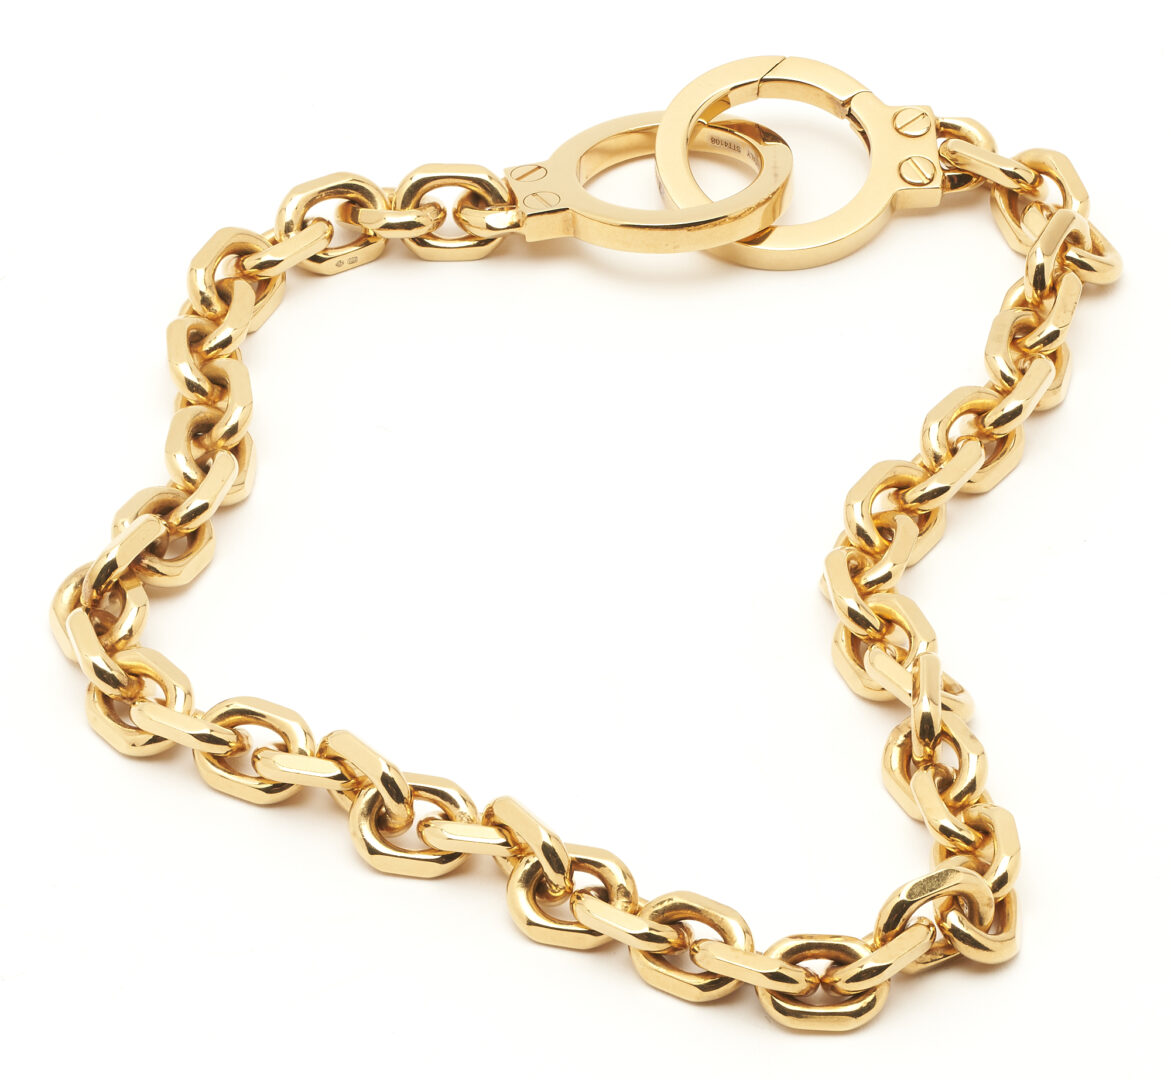 Lot 792: Celine Chaine Triomphe Golden Handcuff Necklace in Vermeil